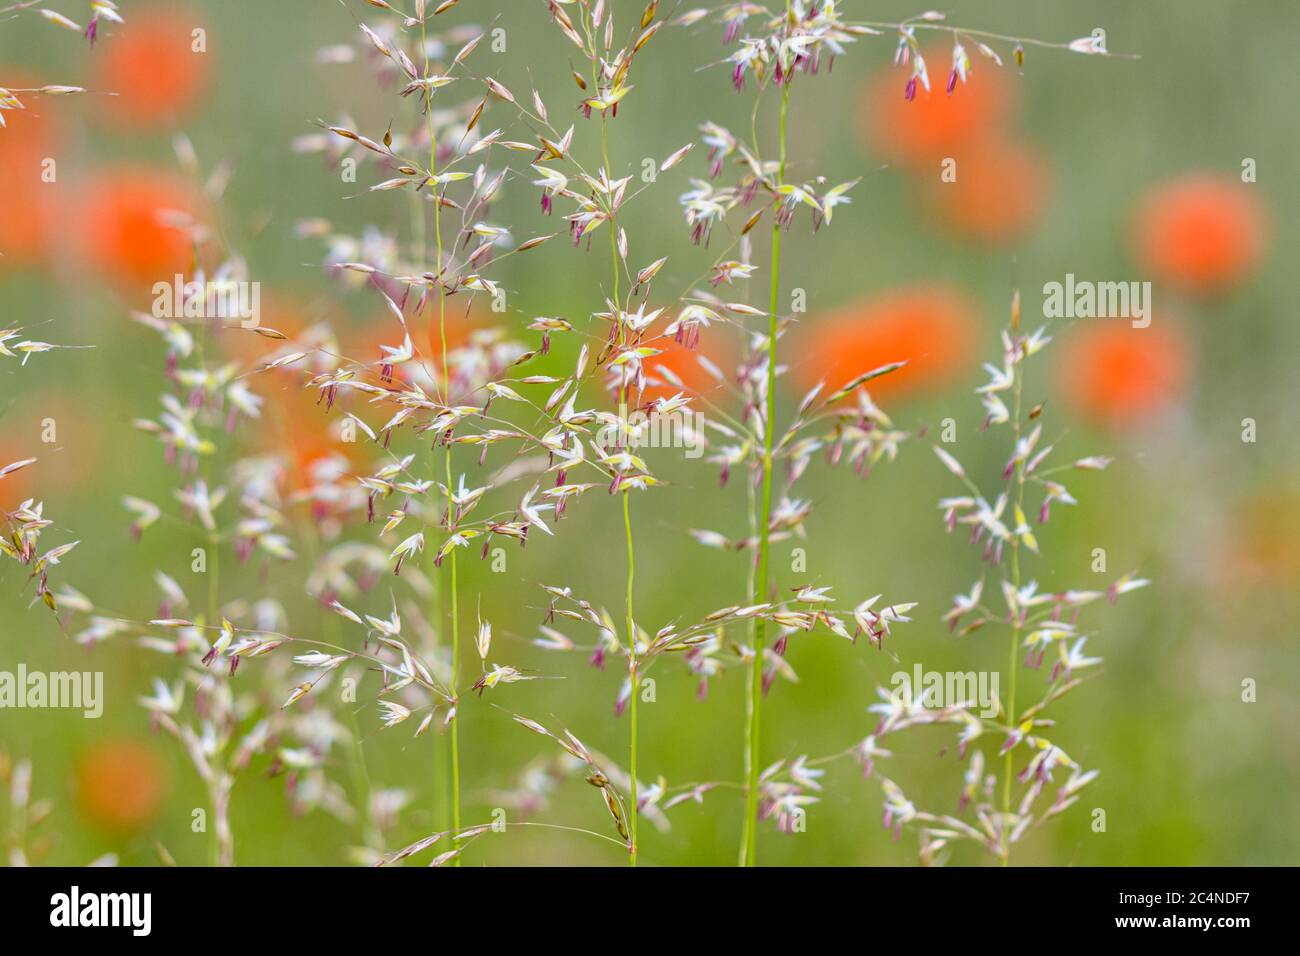 grass with corn poppy Stock Photo